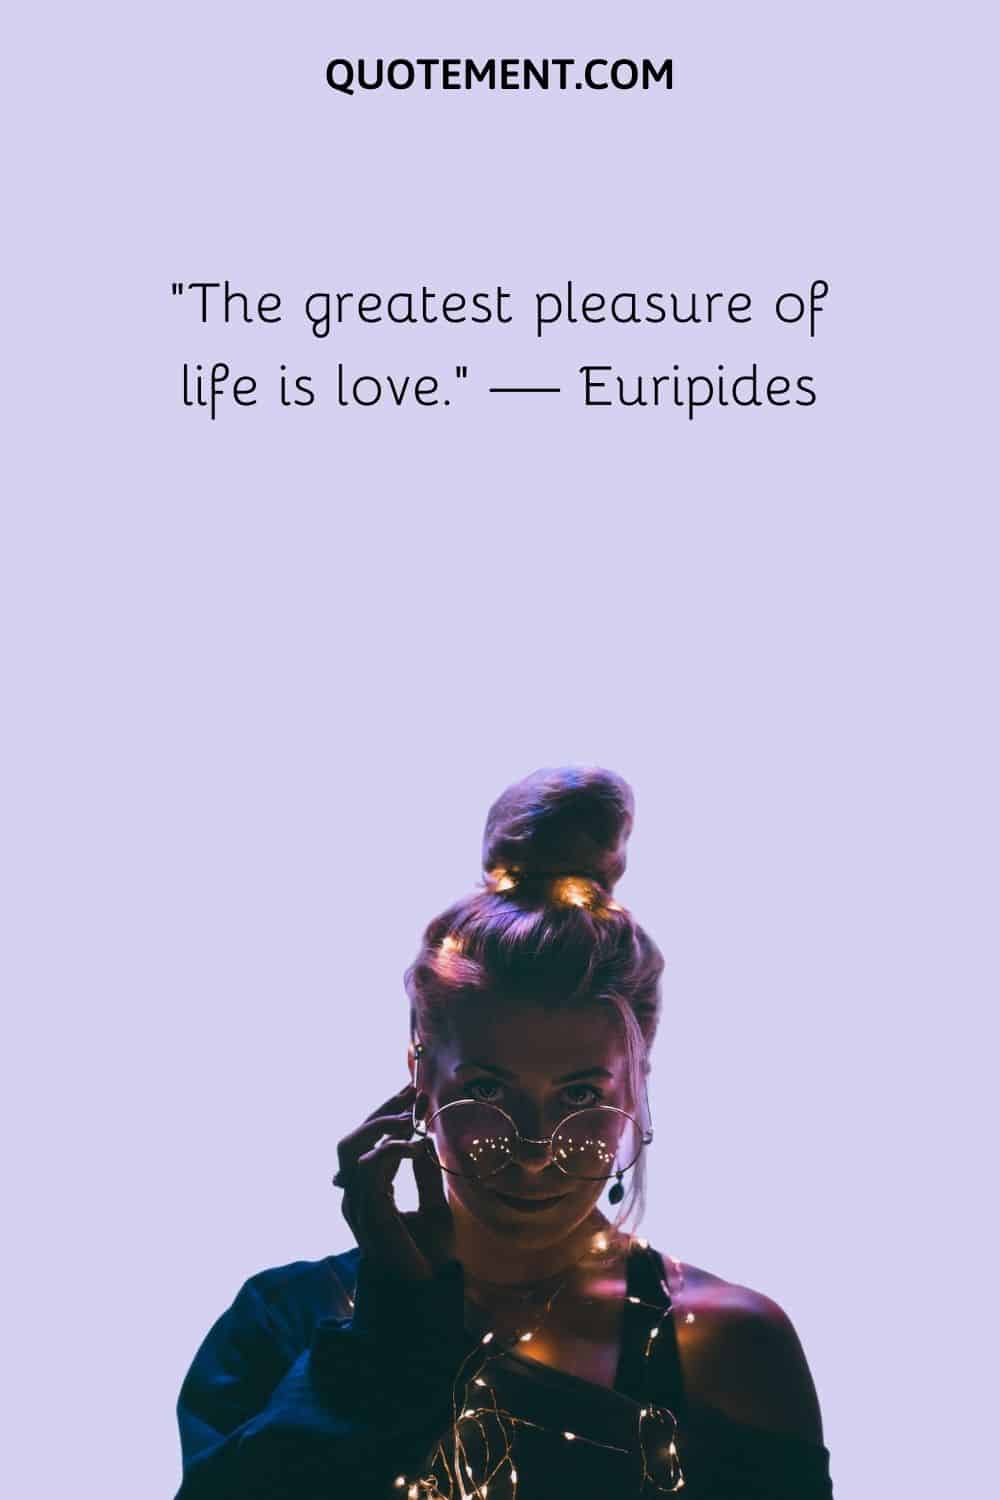 The greatest pleasure of life is love